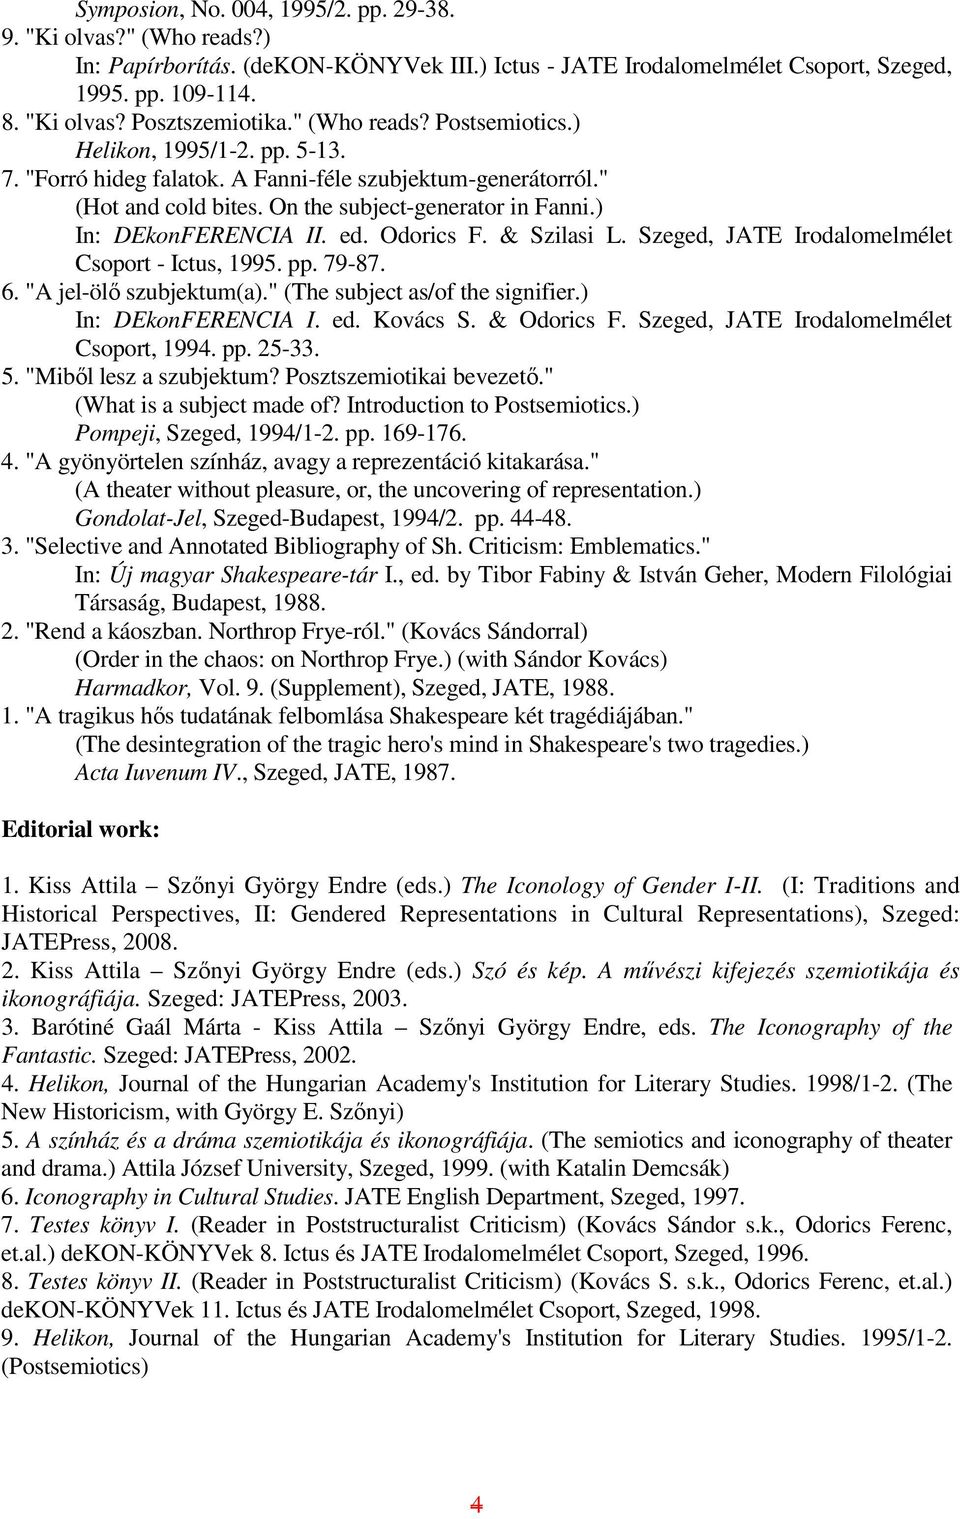 ) In: DEkonFERENCIA II. ed. Odorics F. & Szilasi L. Szeged, JATE Irodalomelmélet Csoport - Ictus, 1995. pp. 79-87. 6. "A jel-ölı szubjektum(a)." (The subject as/of the signifier.) In: DEkonFERENCIA I. ed. Kovács S.